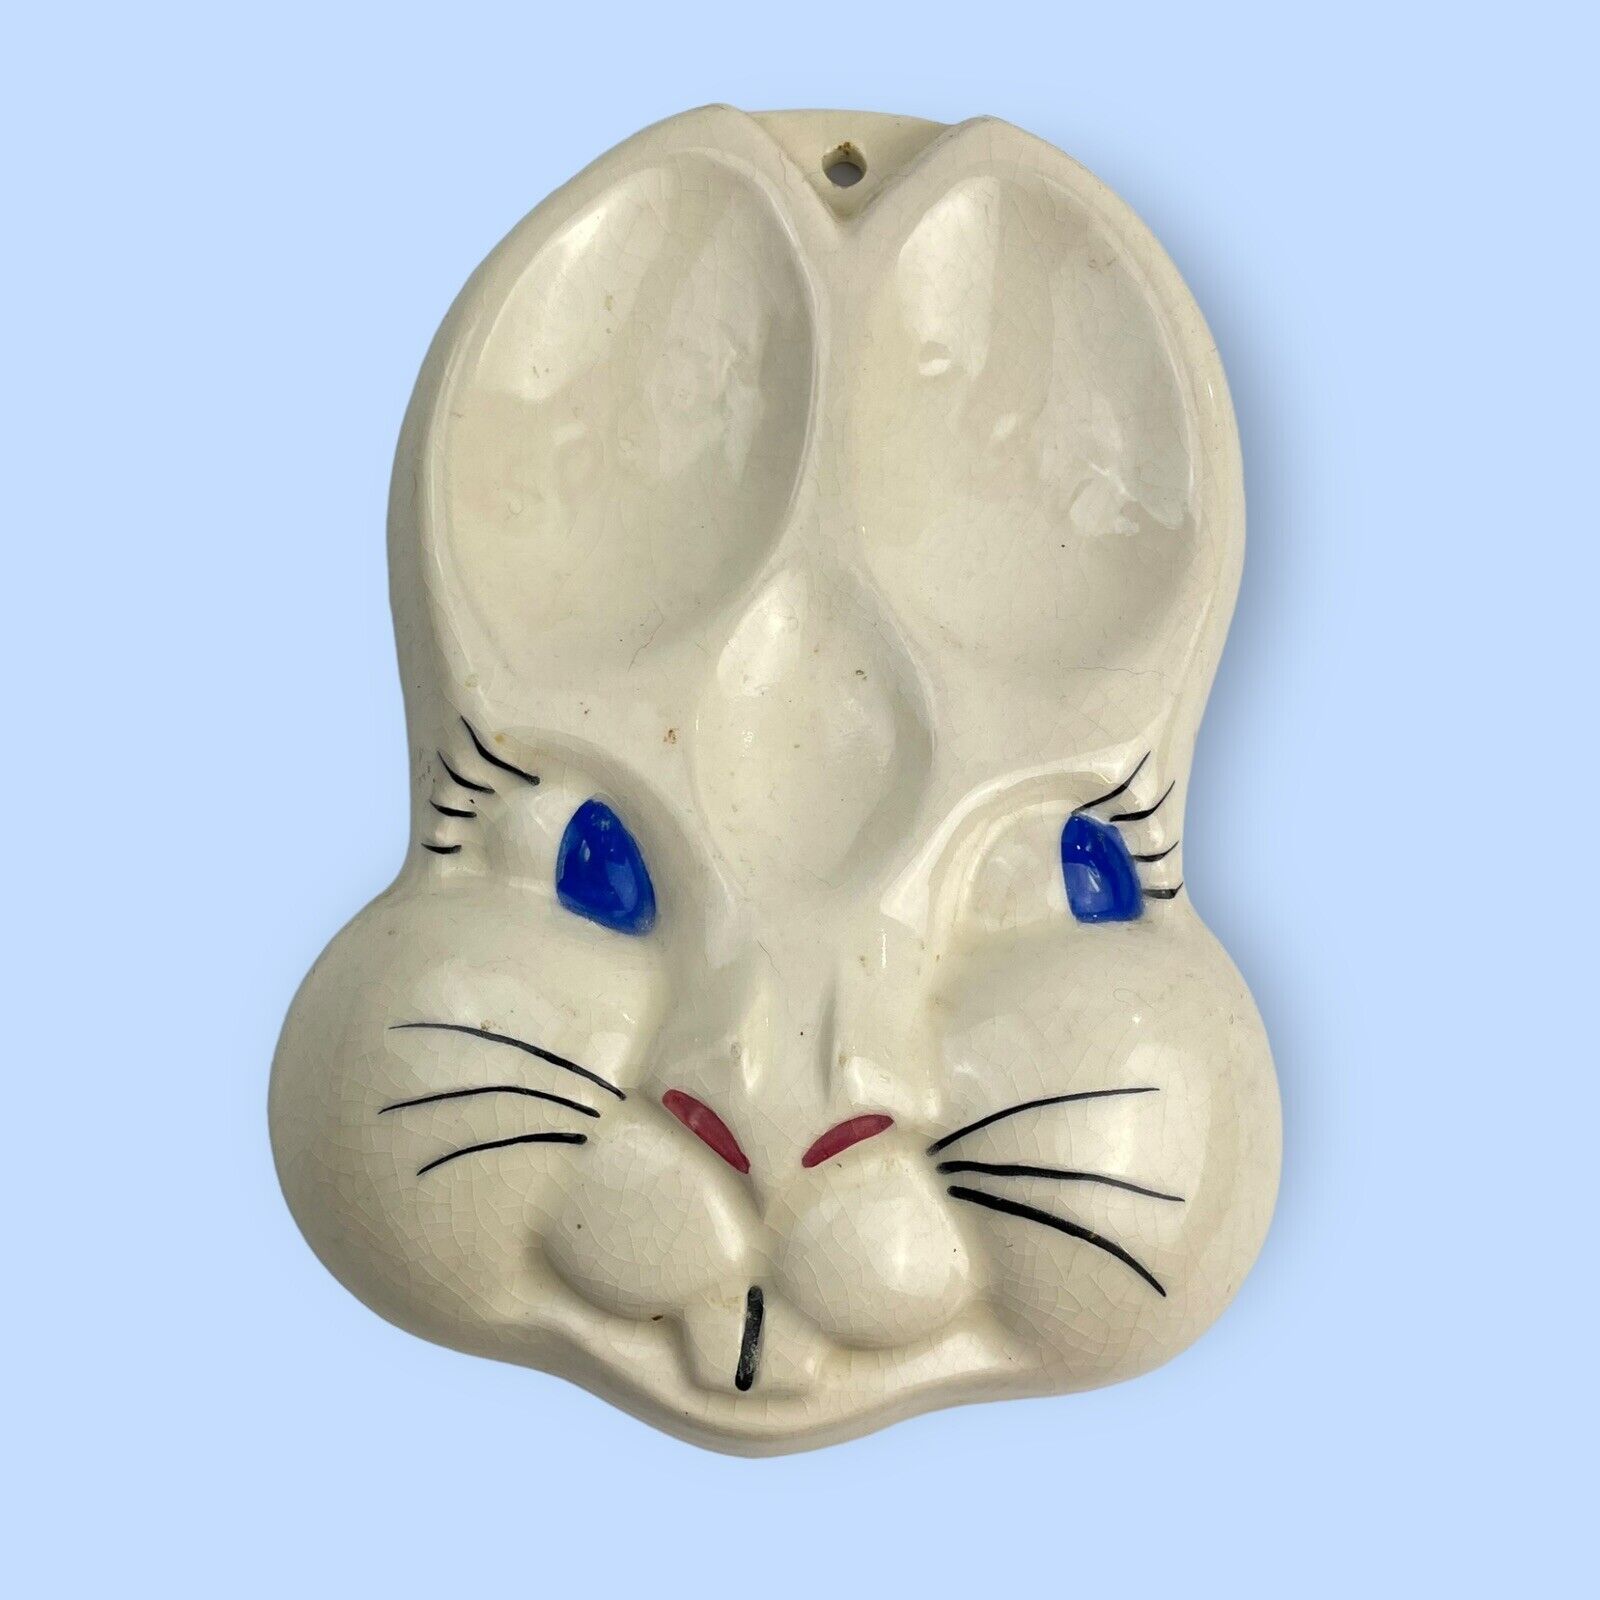 VTG Hand Painted Anthropomorphic Bunny Rabbit Spoon Rest Ceramic Creepy Decor